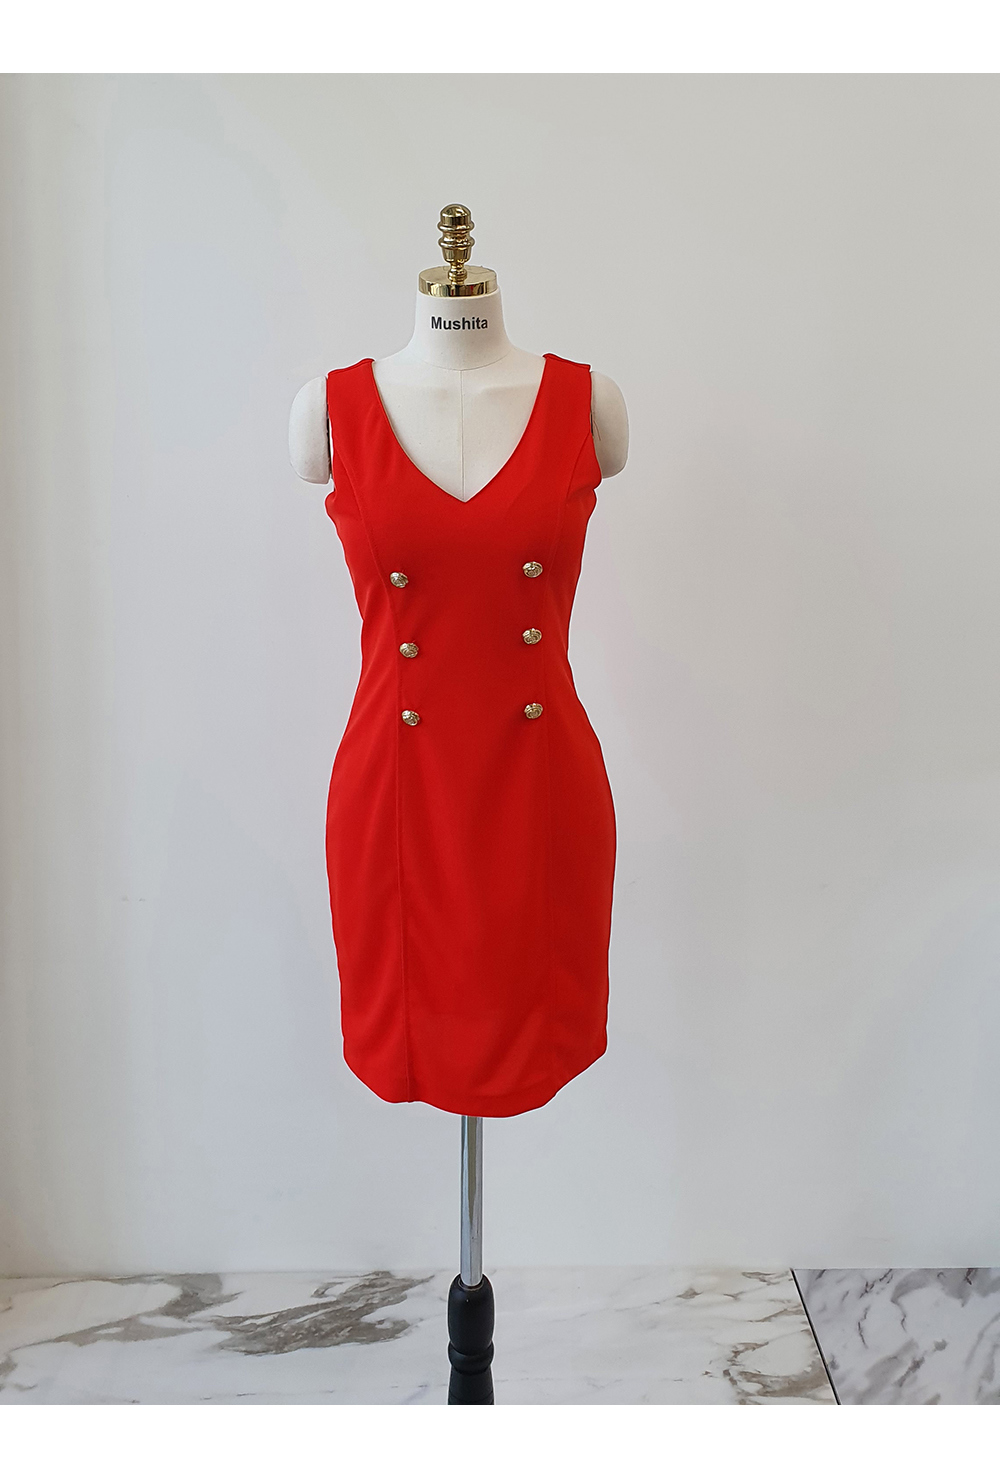 dress red color image-S1L1